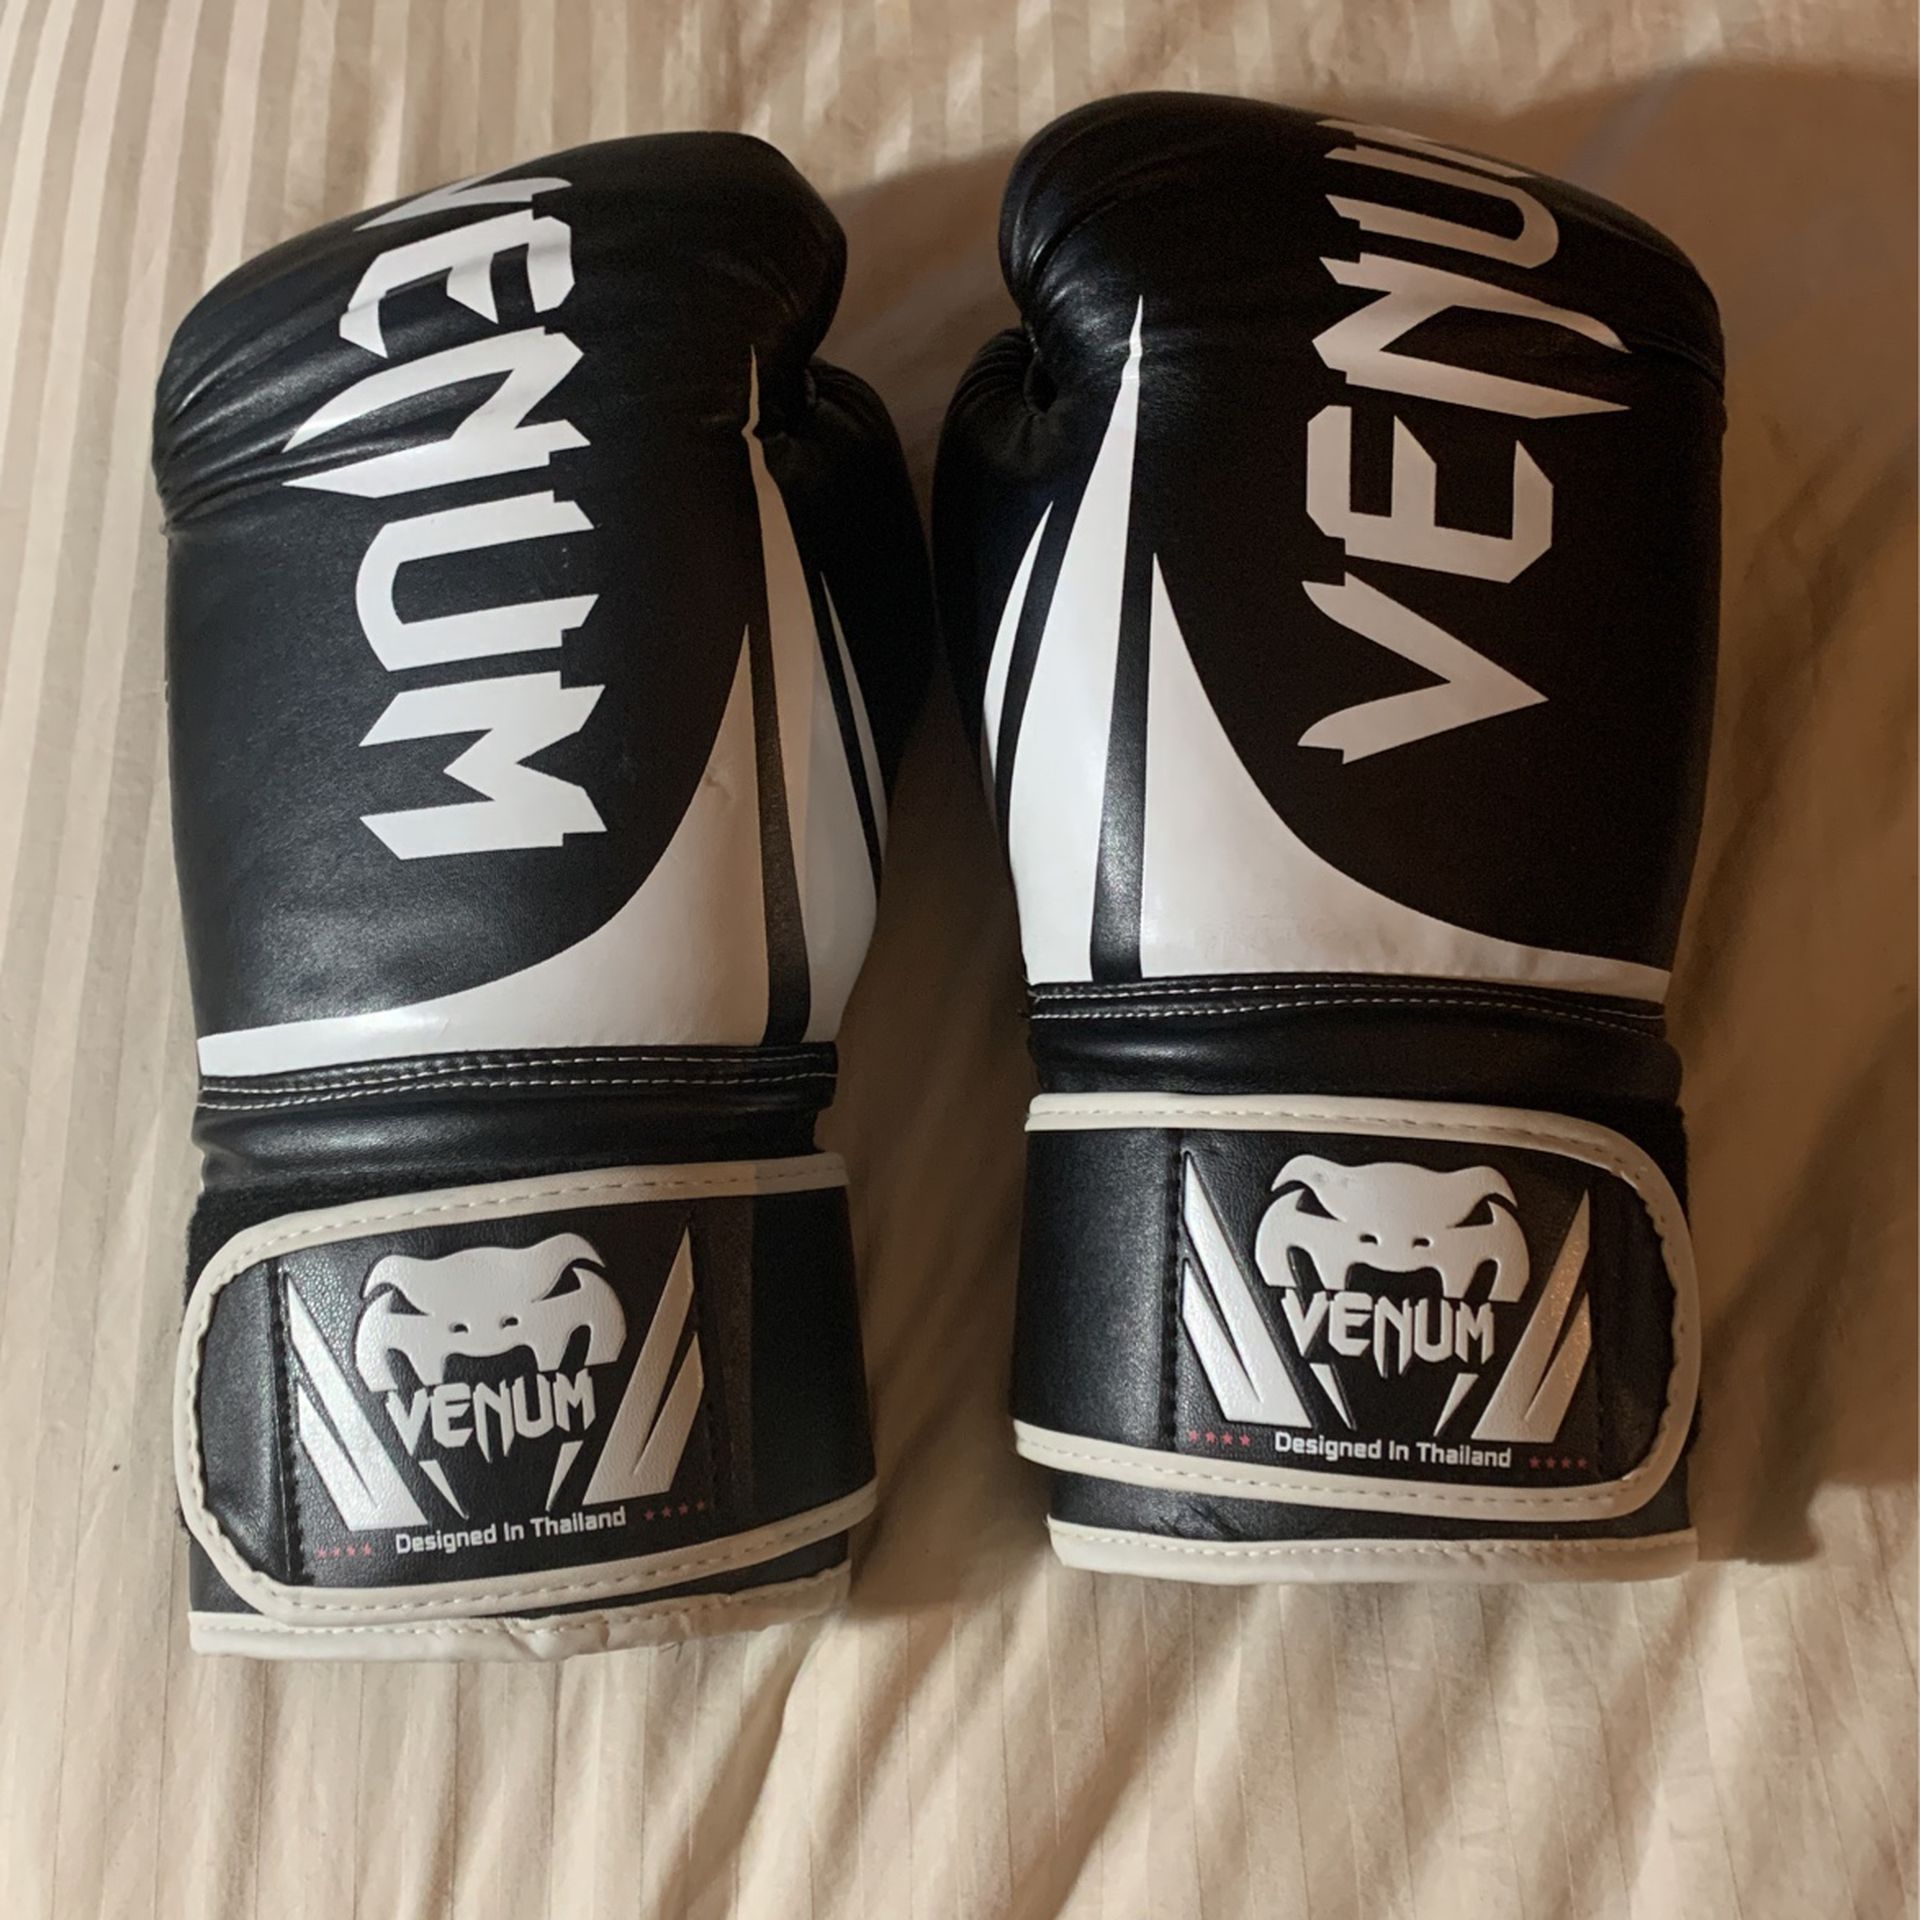  Venum Boxing Gloves